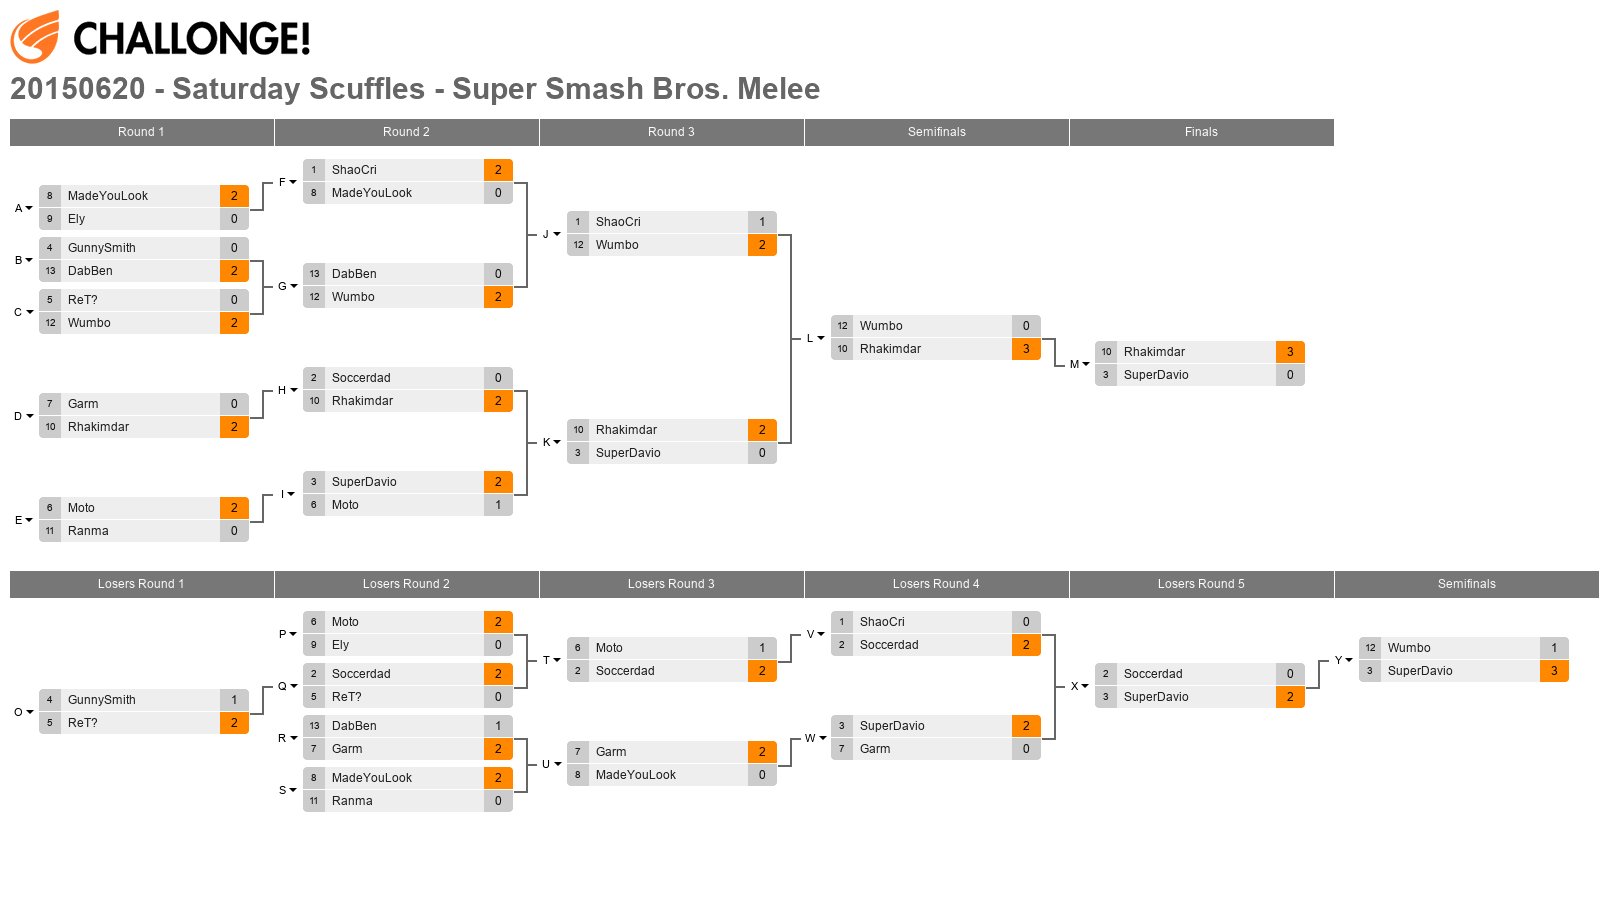 20150620 - Saturday Scuffles - Super Smash Bros. Melee